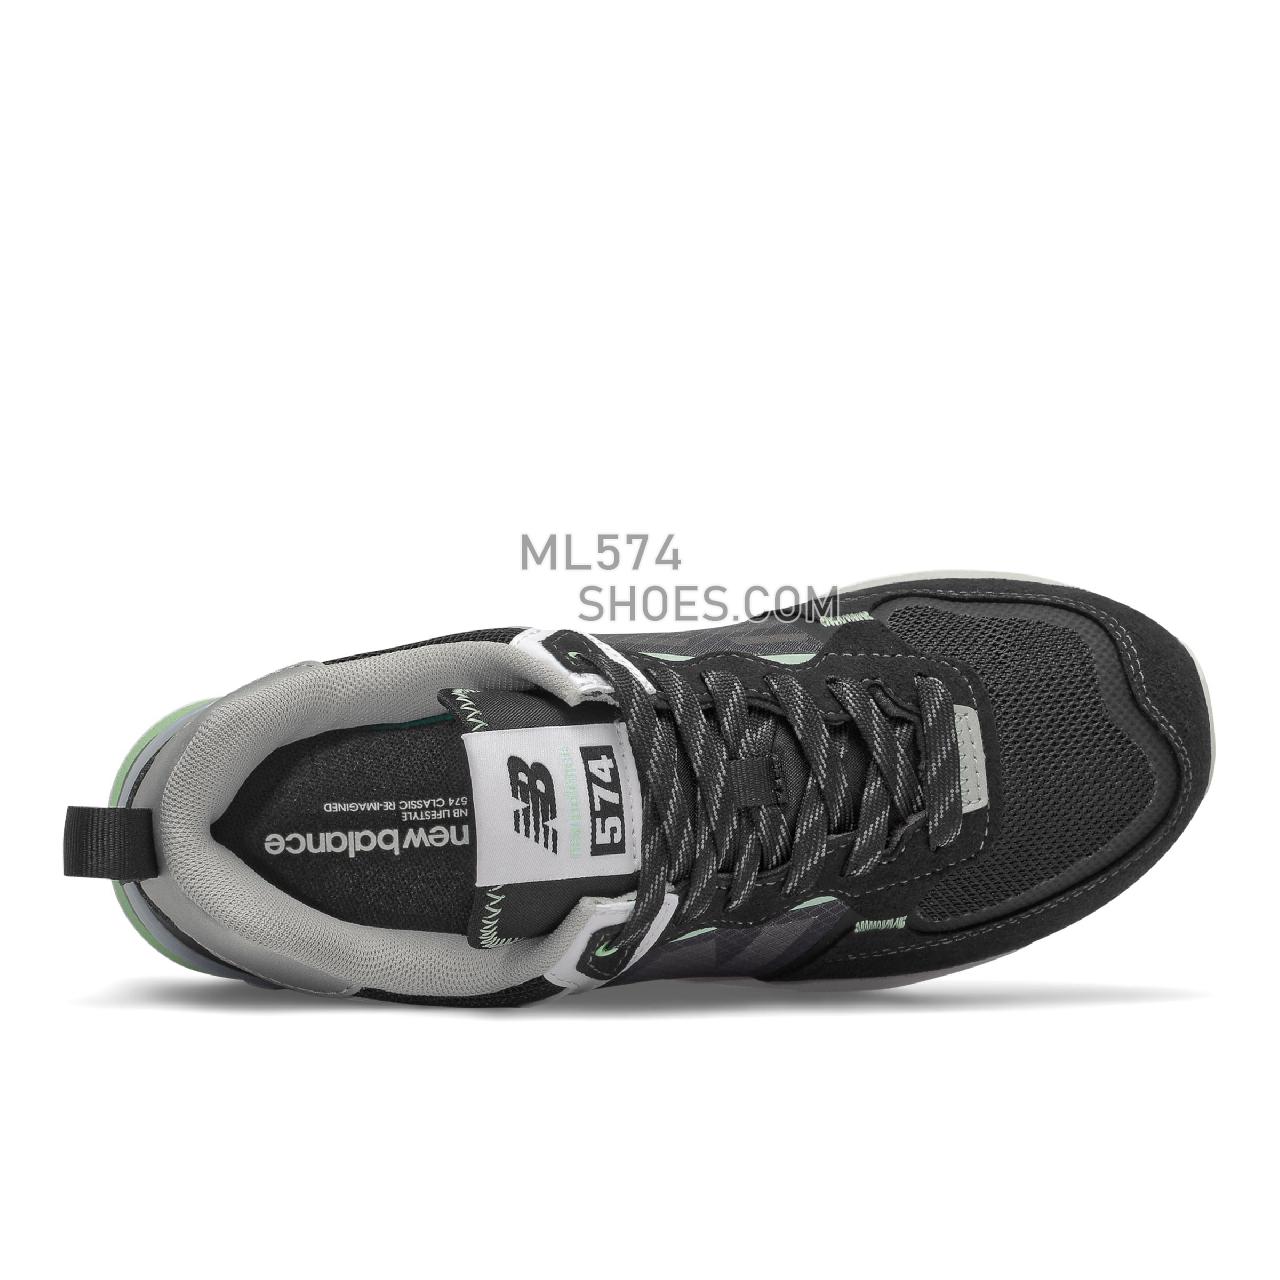 New Balance 574 - Women's Classic Sneakers - Black with Powder Green - WL574IU2